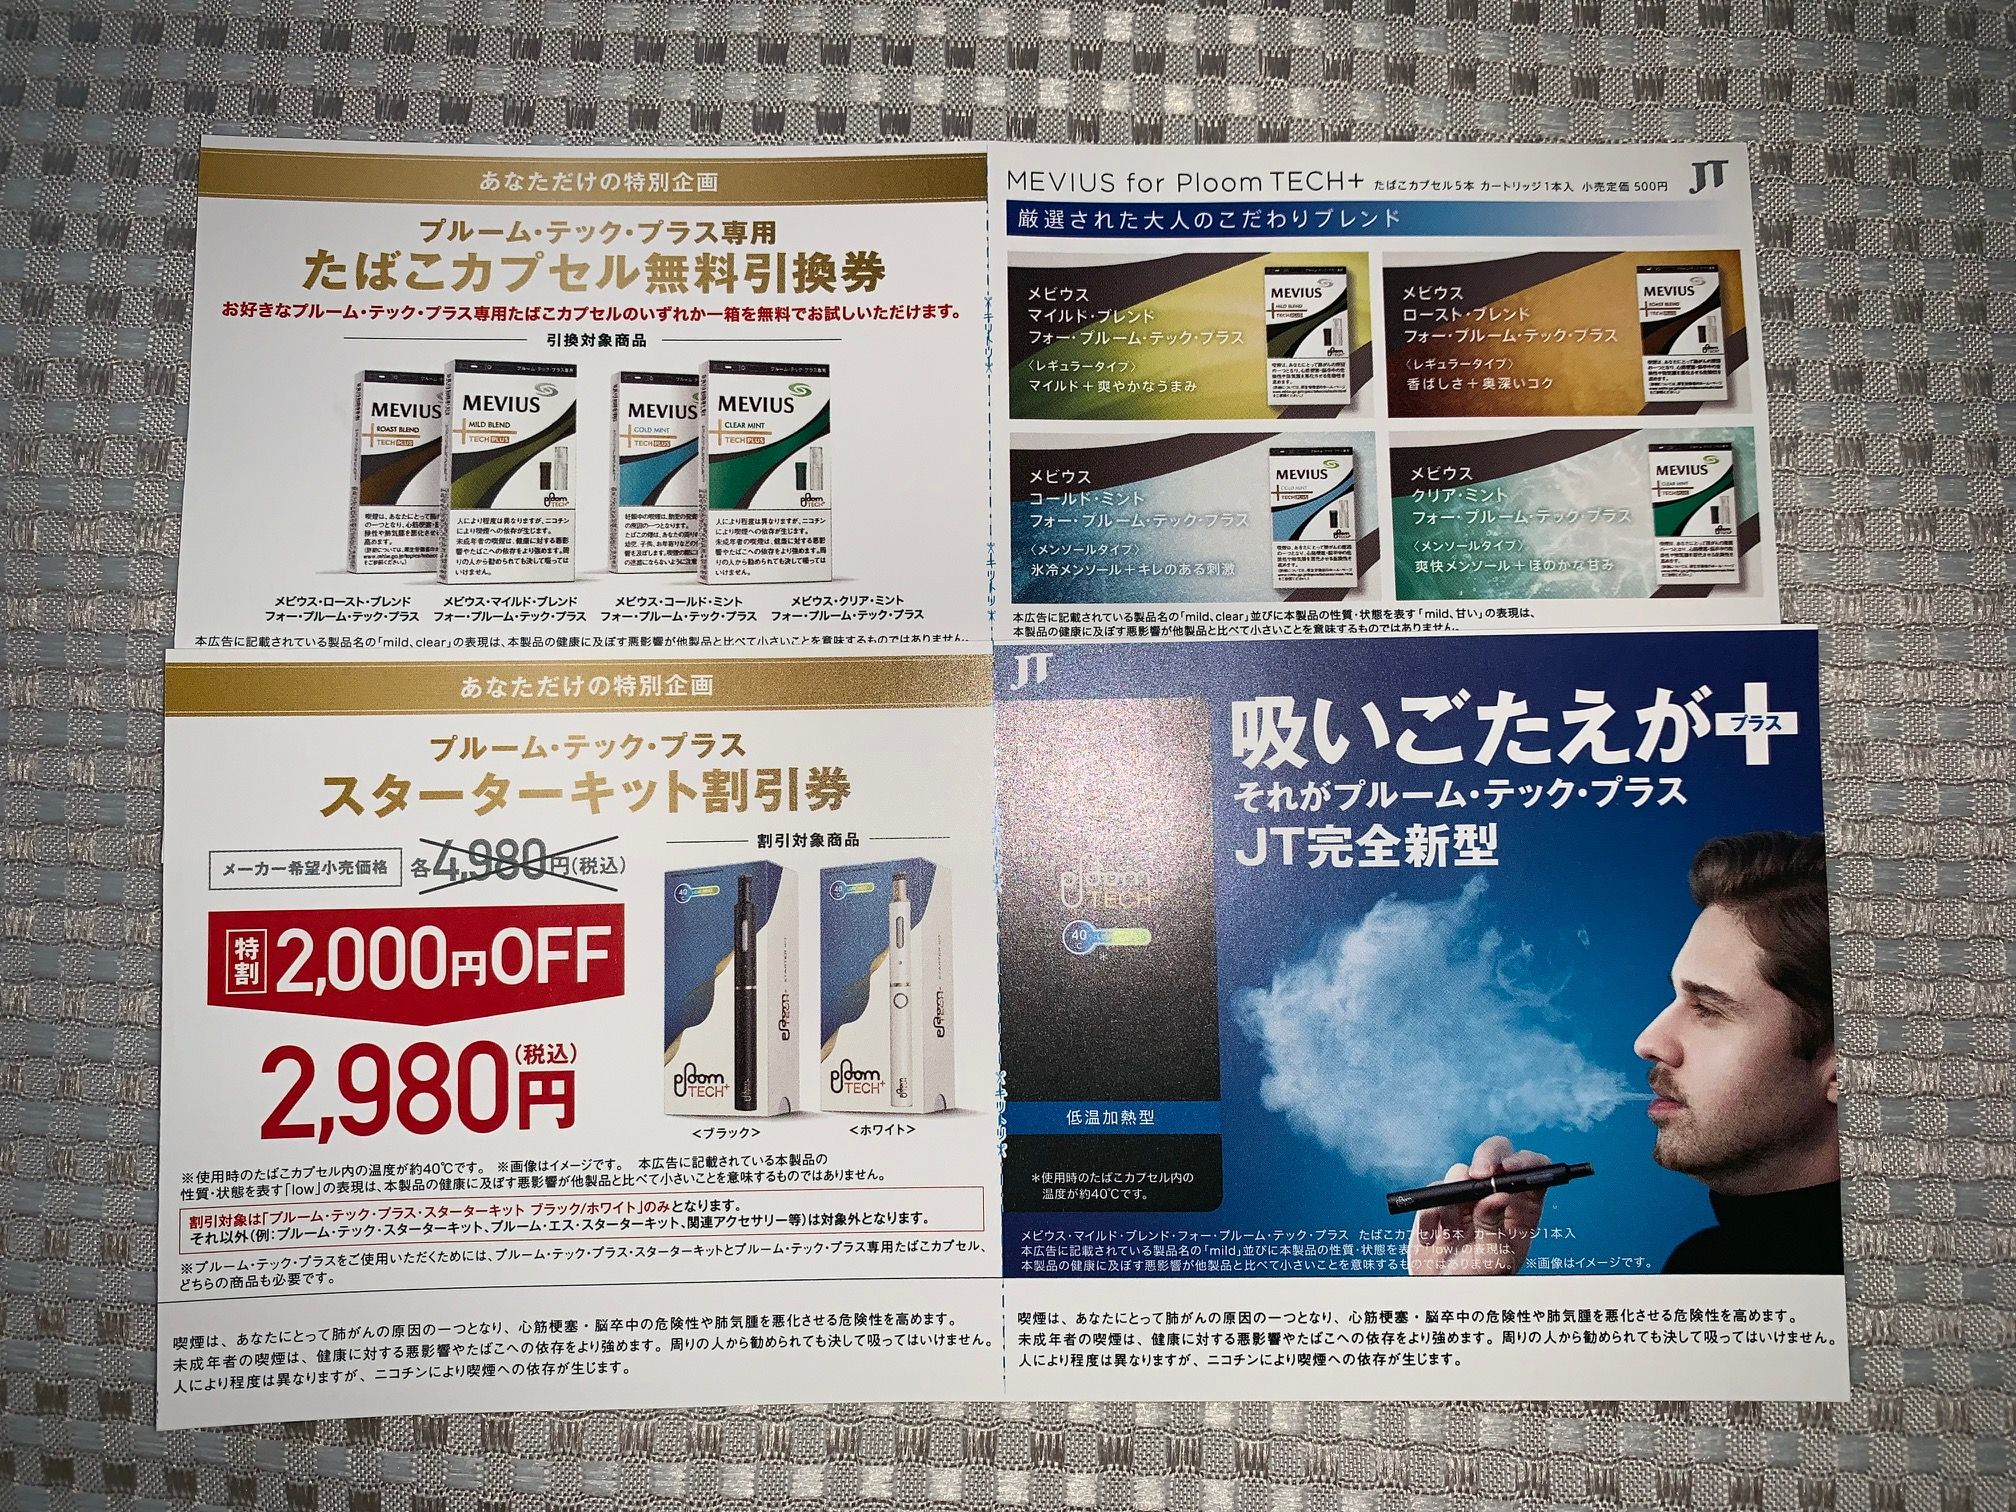 ｊｔ日本たばこ ファミリーマート プルーム テック プラス スターターキット割引券 プラス専用たばこカプセル無料引換券 Ayanokouji40のブログ 楽天ブログ